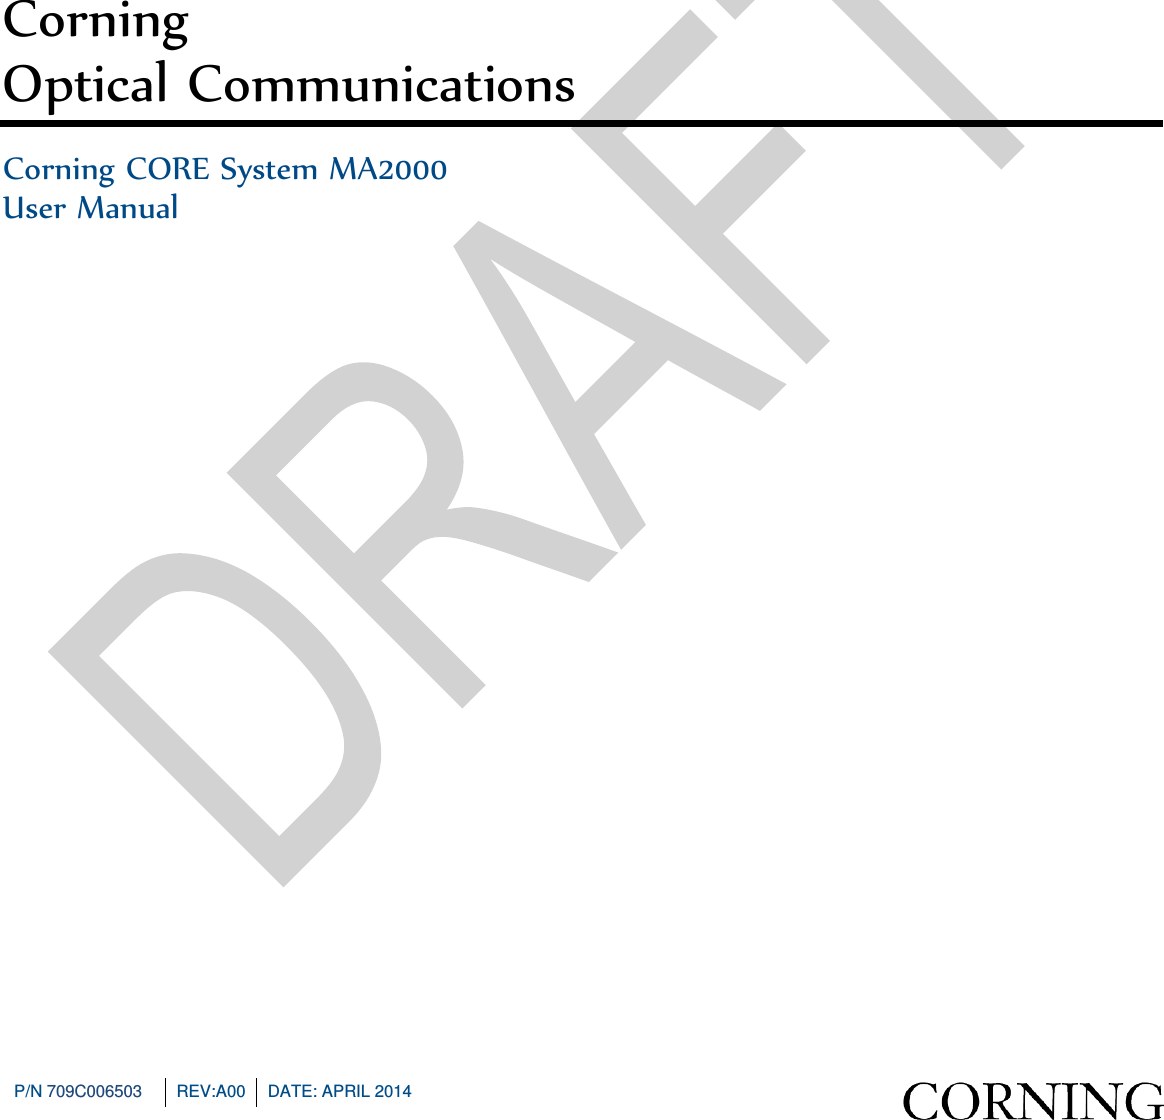  P/N 709C006503 REV:A00 DATE: APRIL 2014       Corning  Optical Communications  Corning CORE System MA2000 User Manual                                   